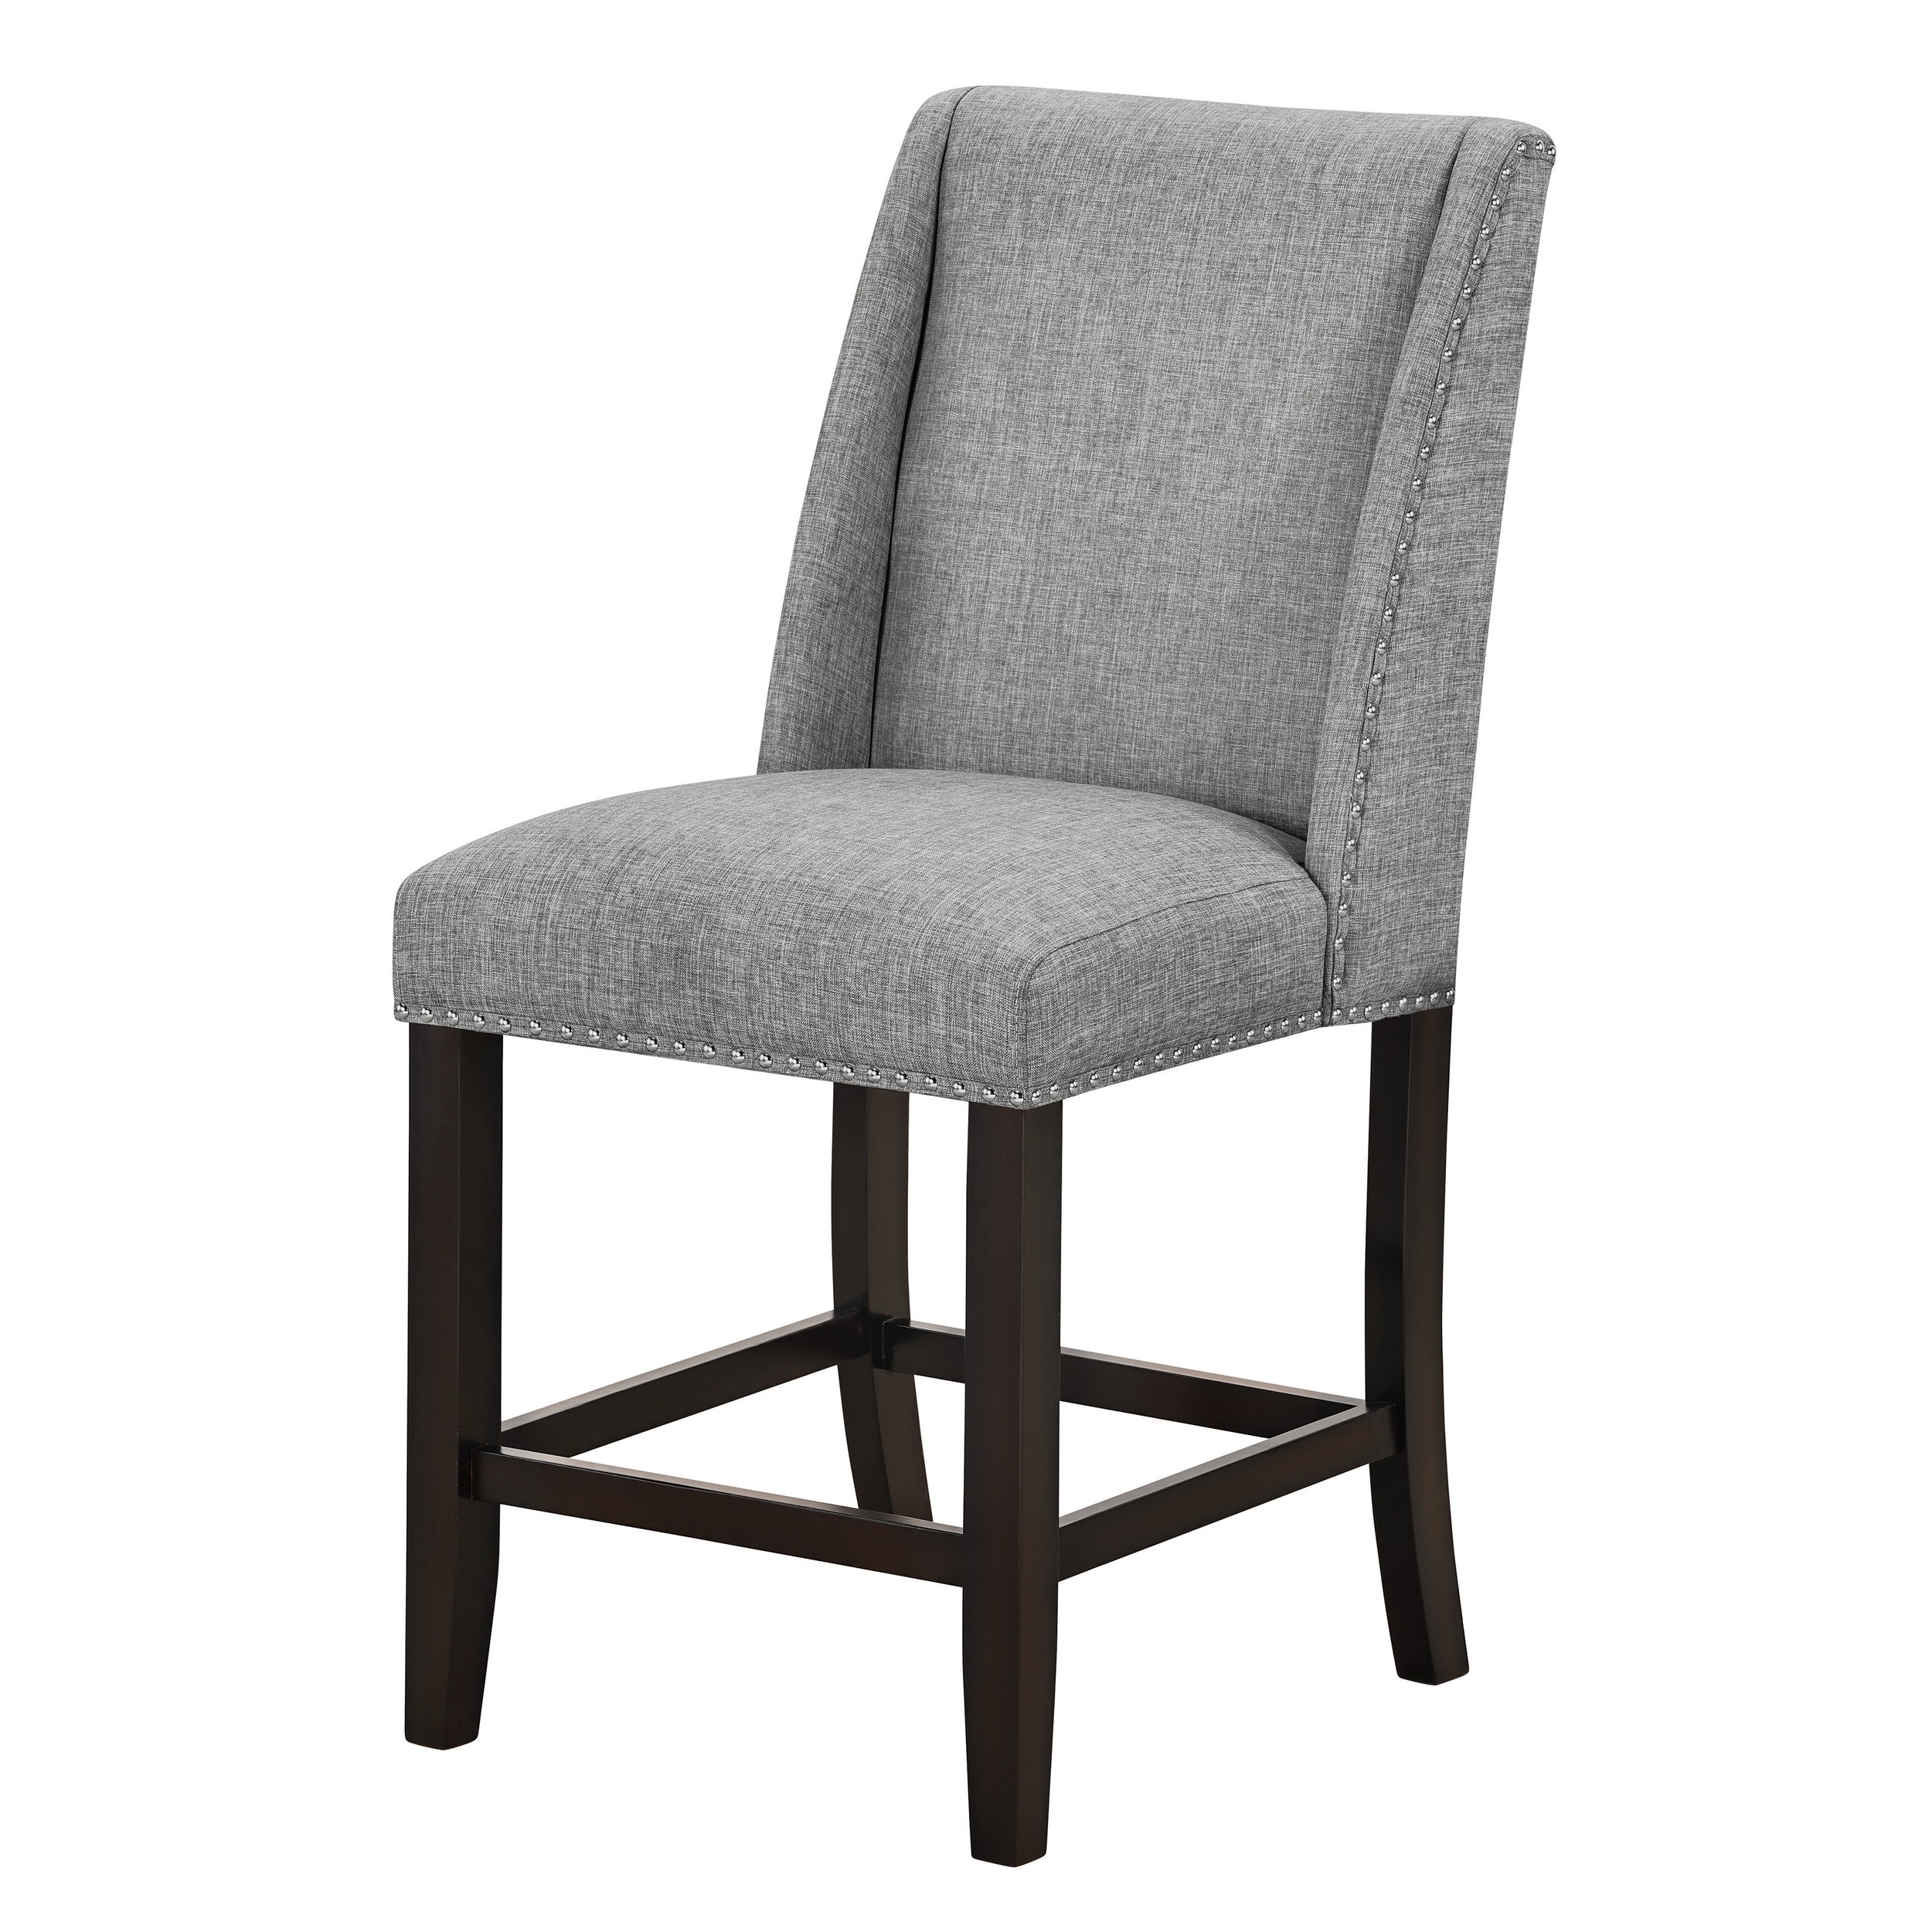 Fein 26 Inch Set Of 2 Counter Dining Chair, Gray, Brown Wood, Nailhead Trim - Saltoro Sherpi